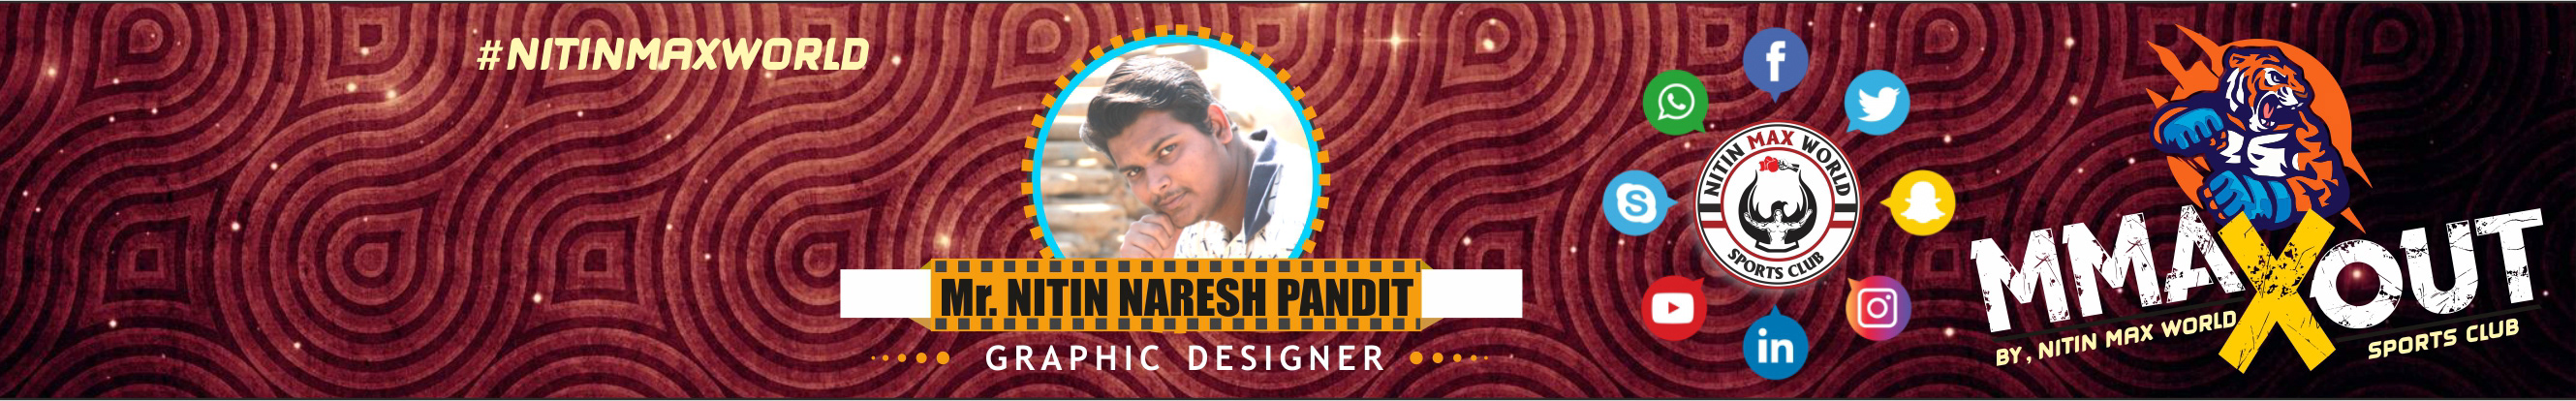 Banner de perfil de Nitin Pandit